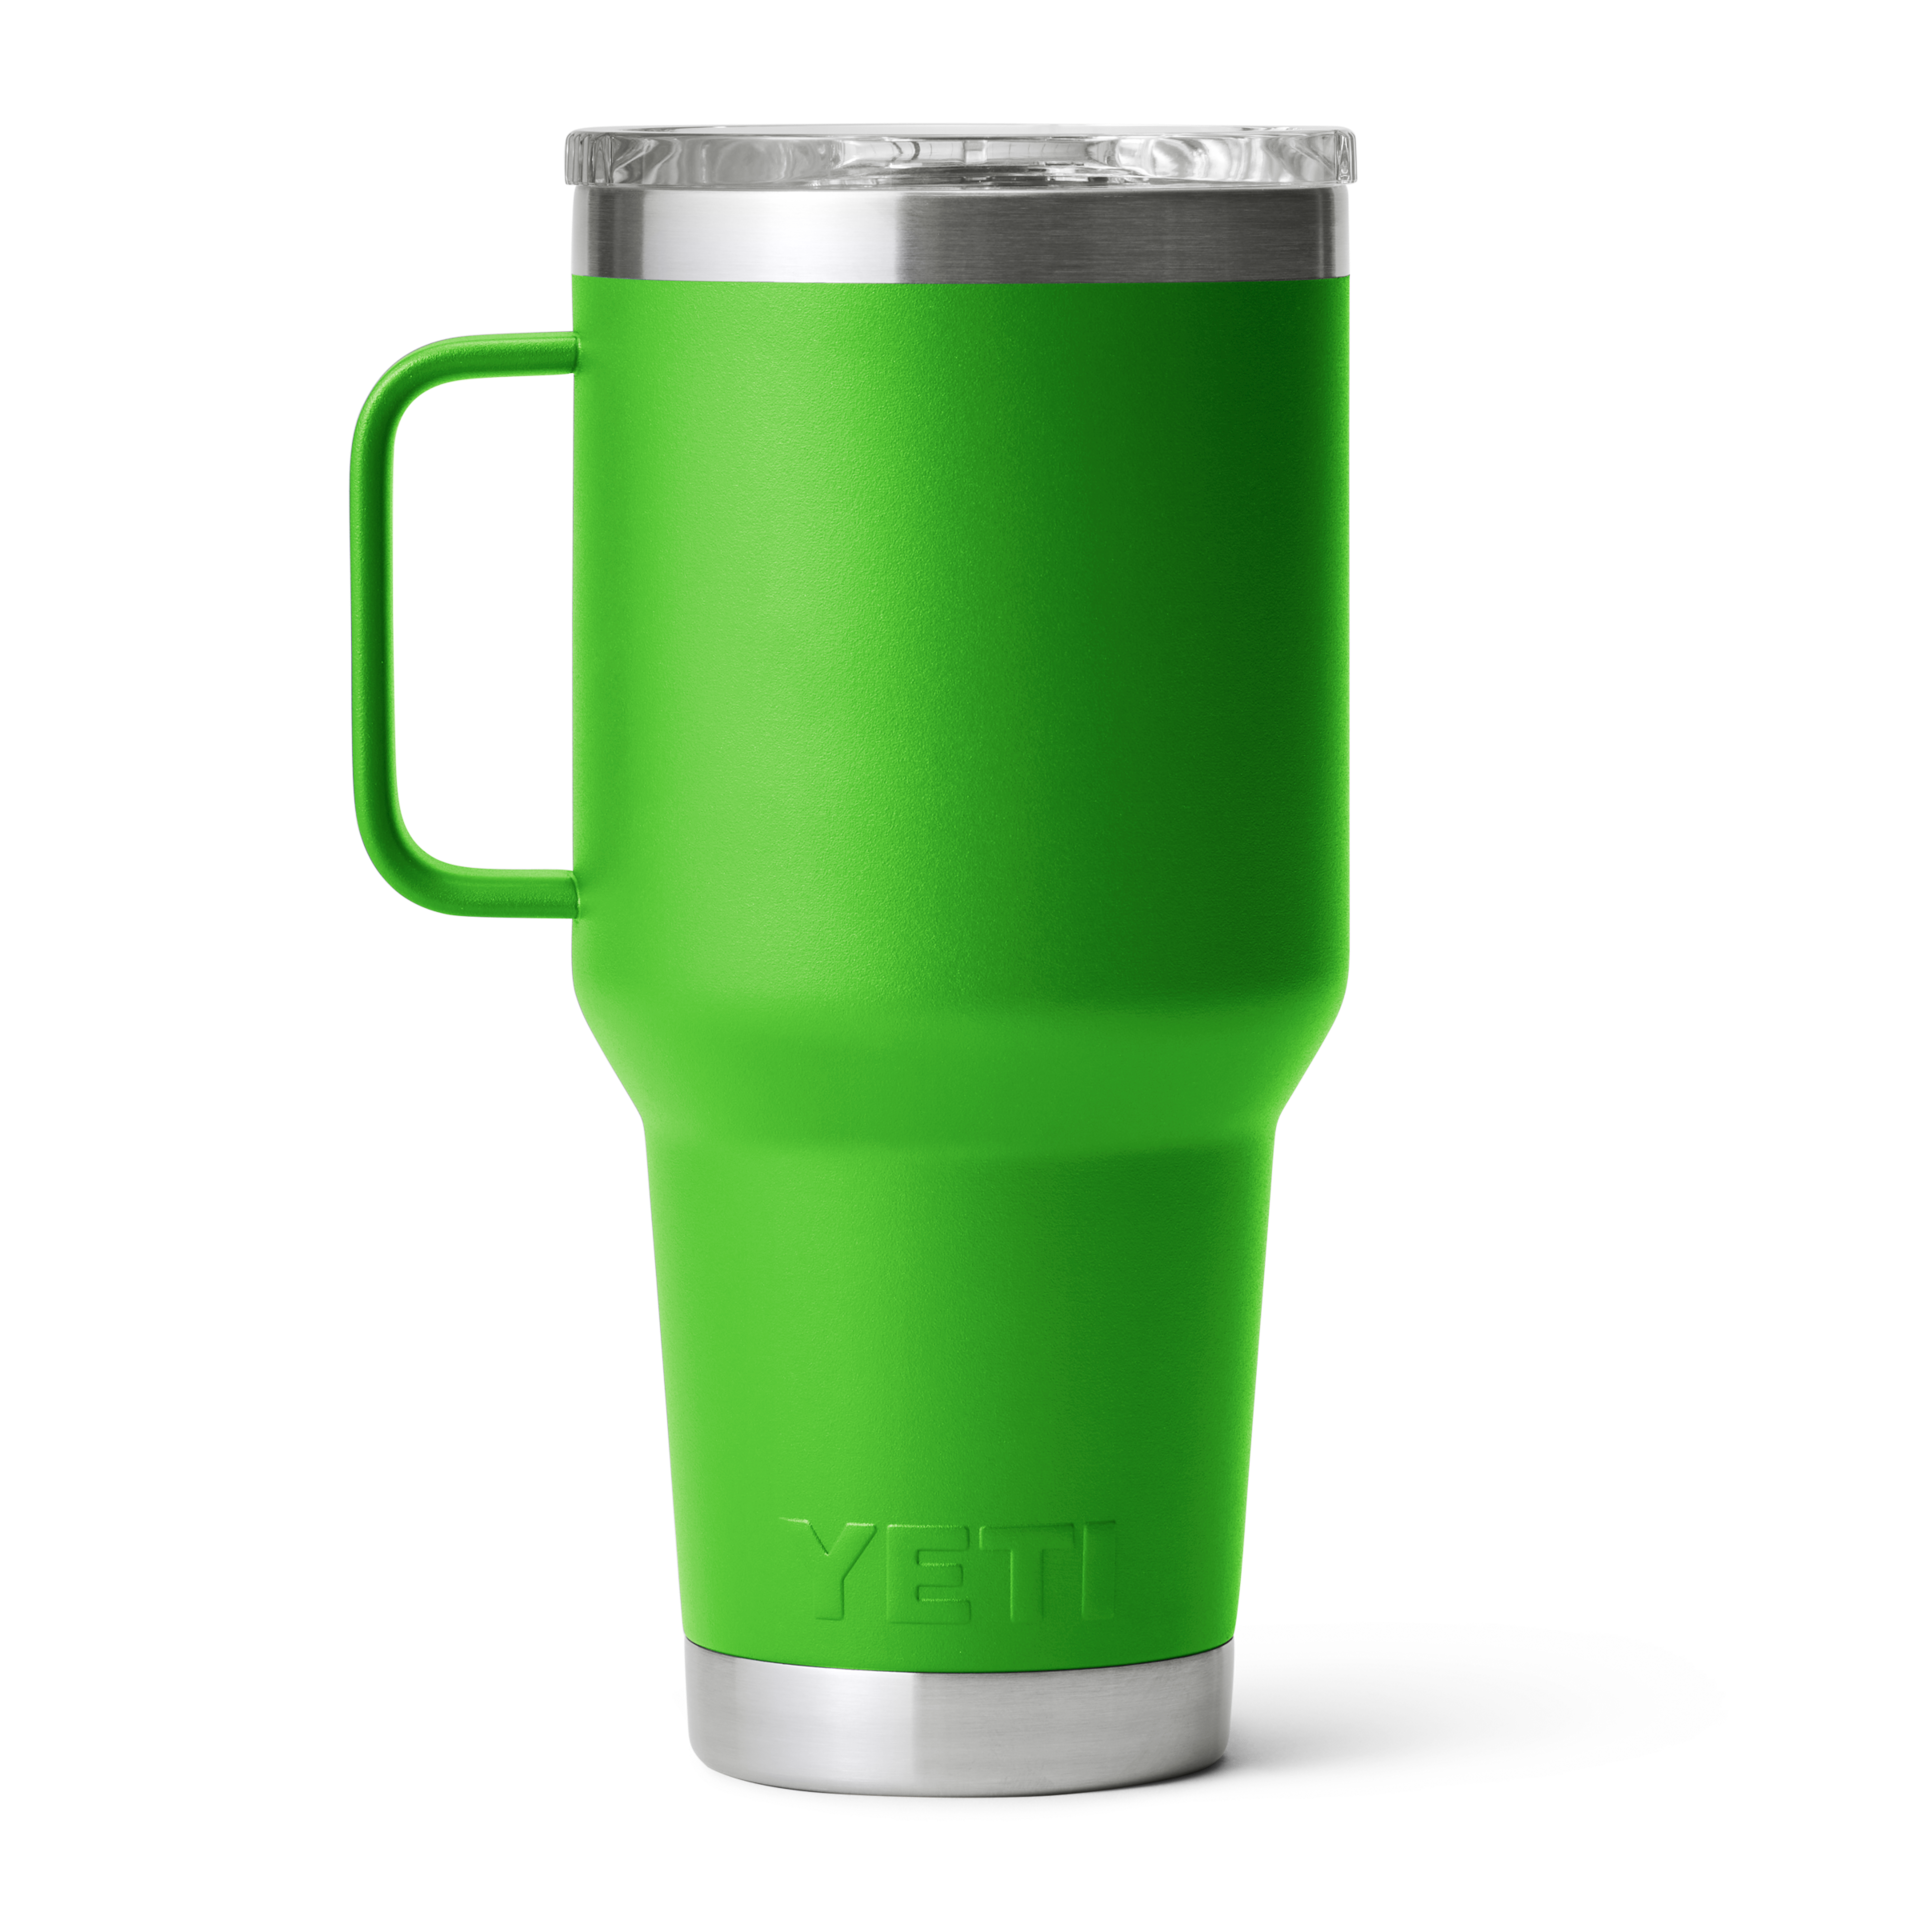 30 oz. / 887ml Travel Mug w/ Stronghold Lid - Canopy Green